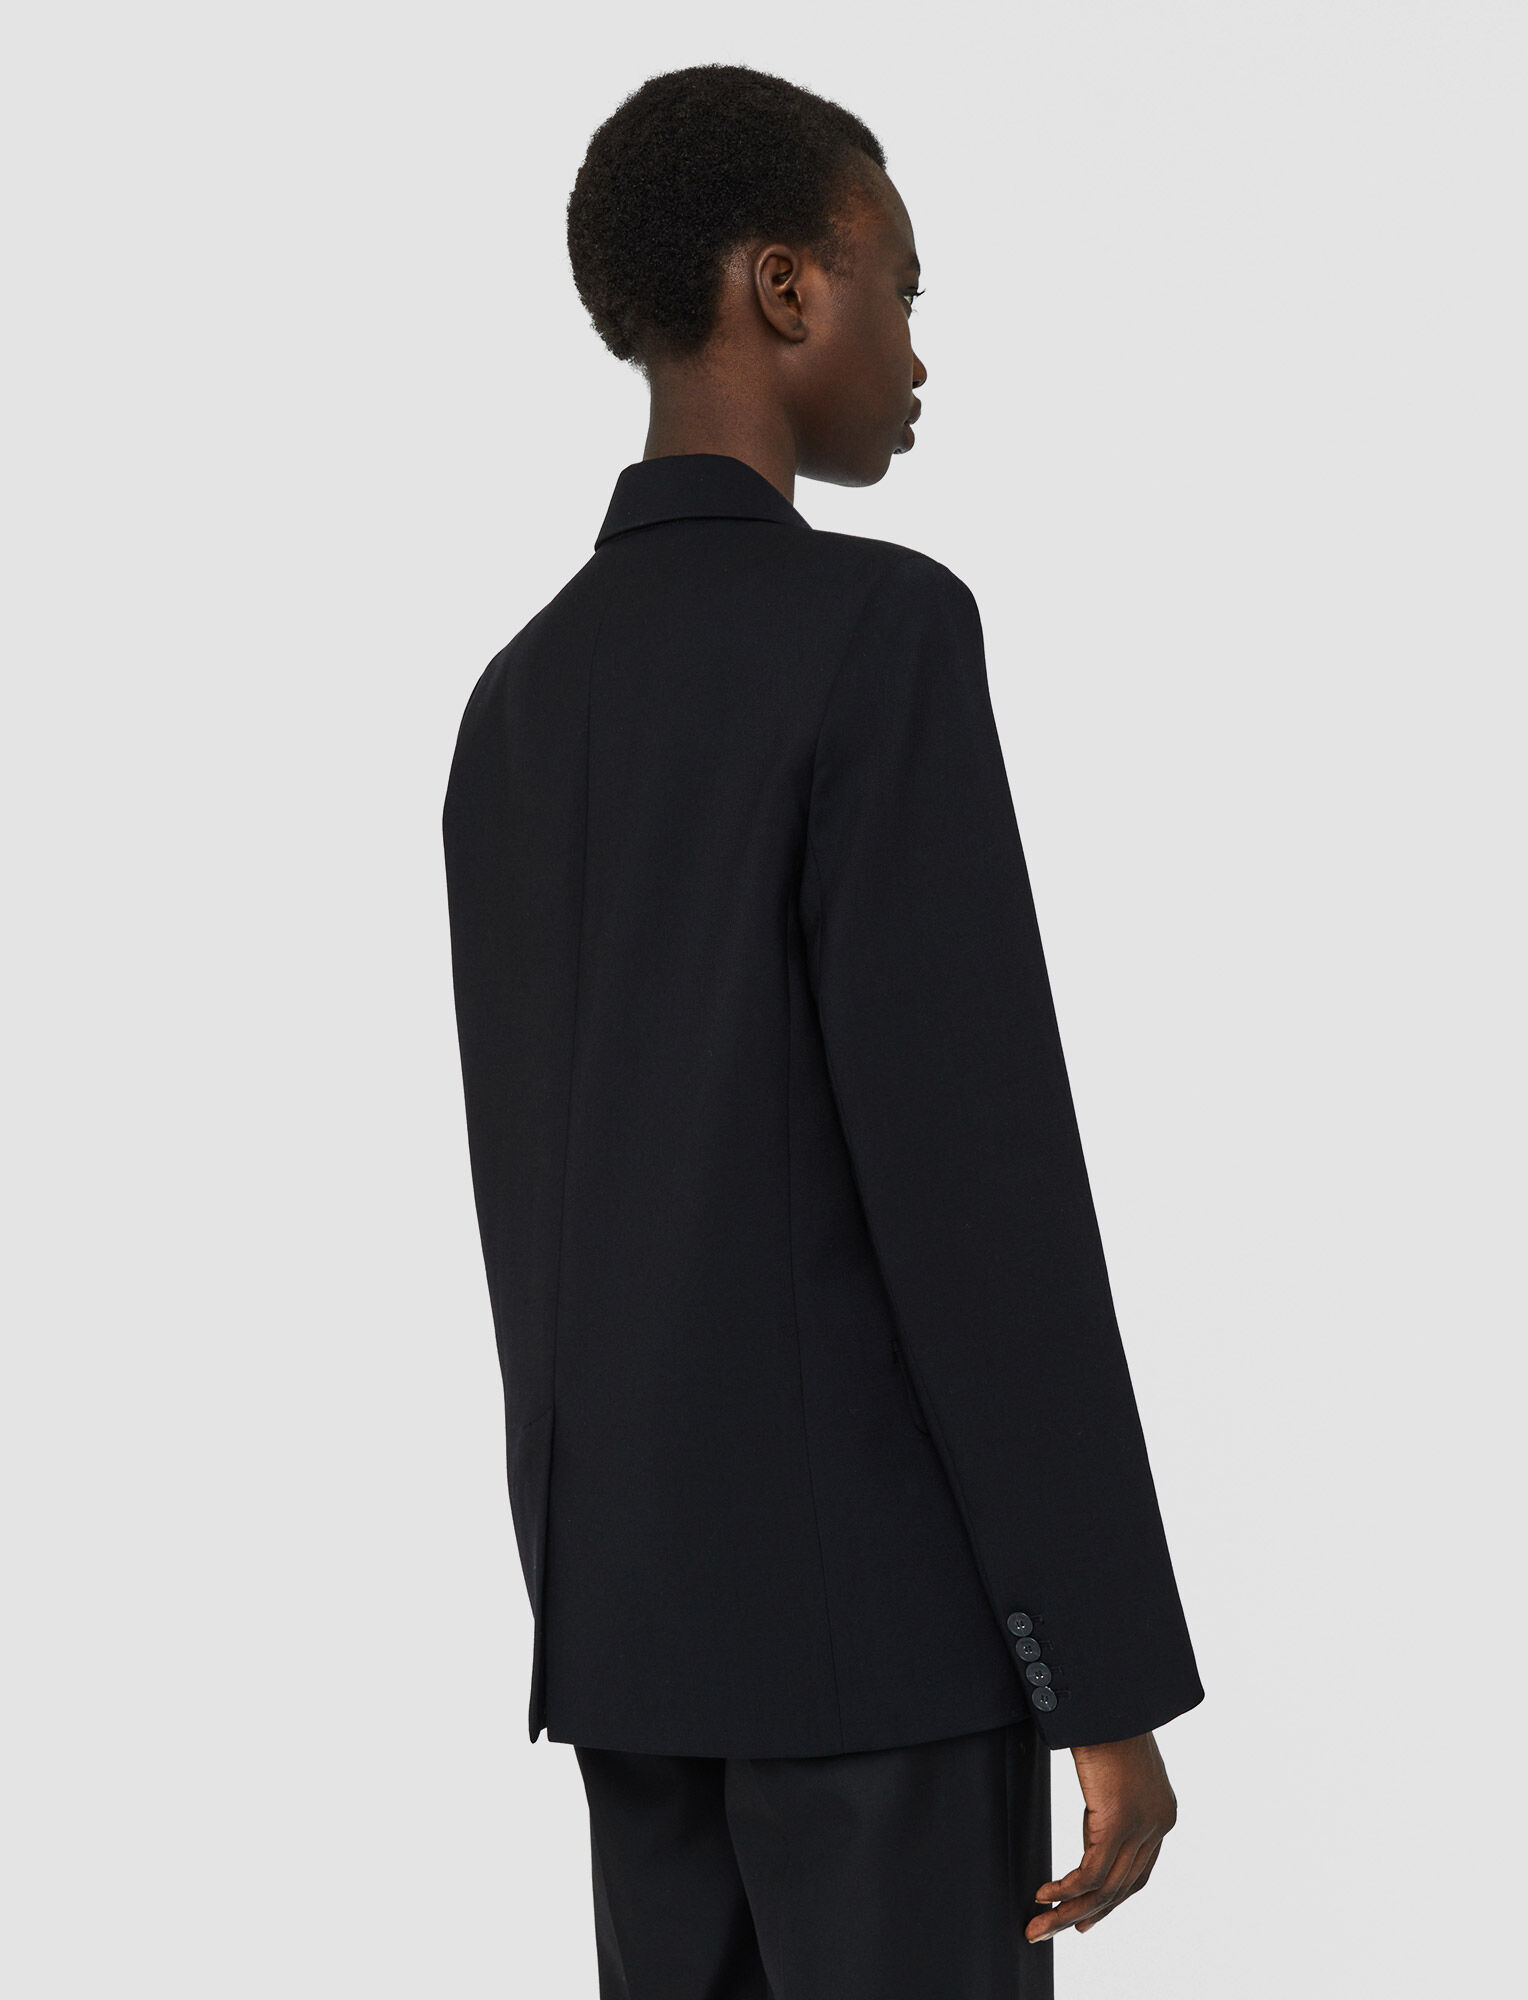 Joseph, Tailoring Wool Stretch Jaden Jacket, in Black